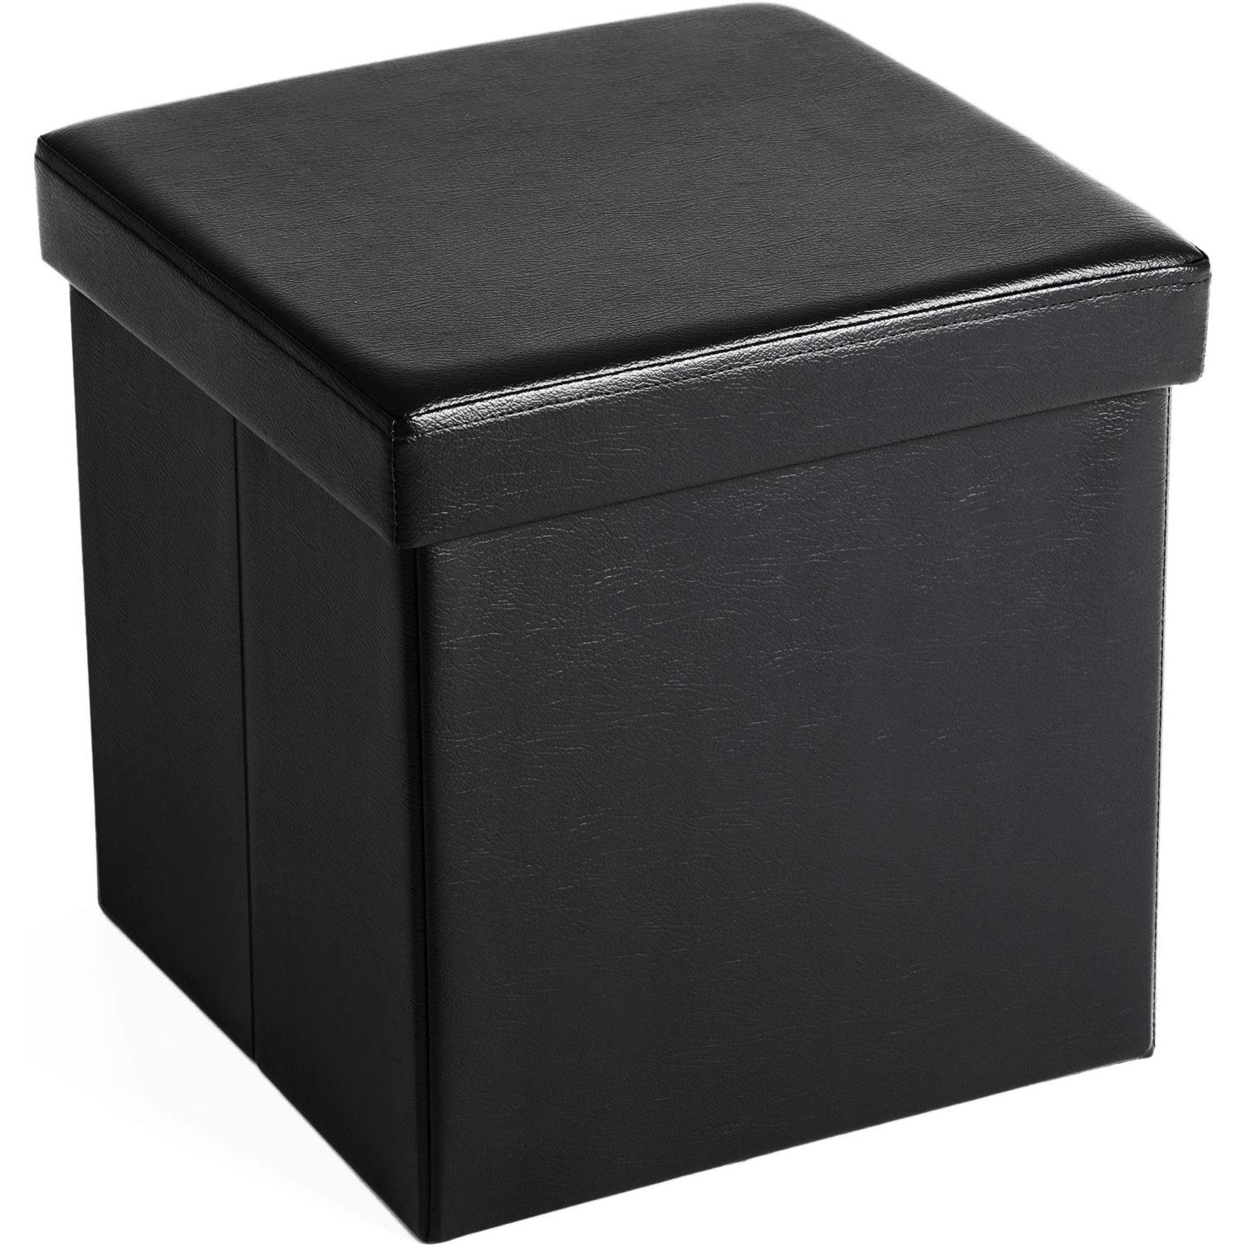 Square Leatherette Foldable Storage Ottoman With Padded Seat, Black- Saltoro Sherpi